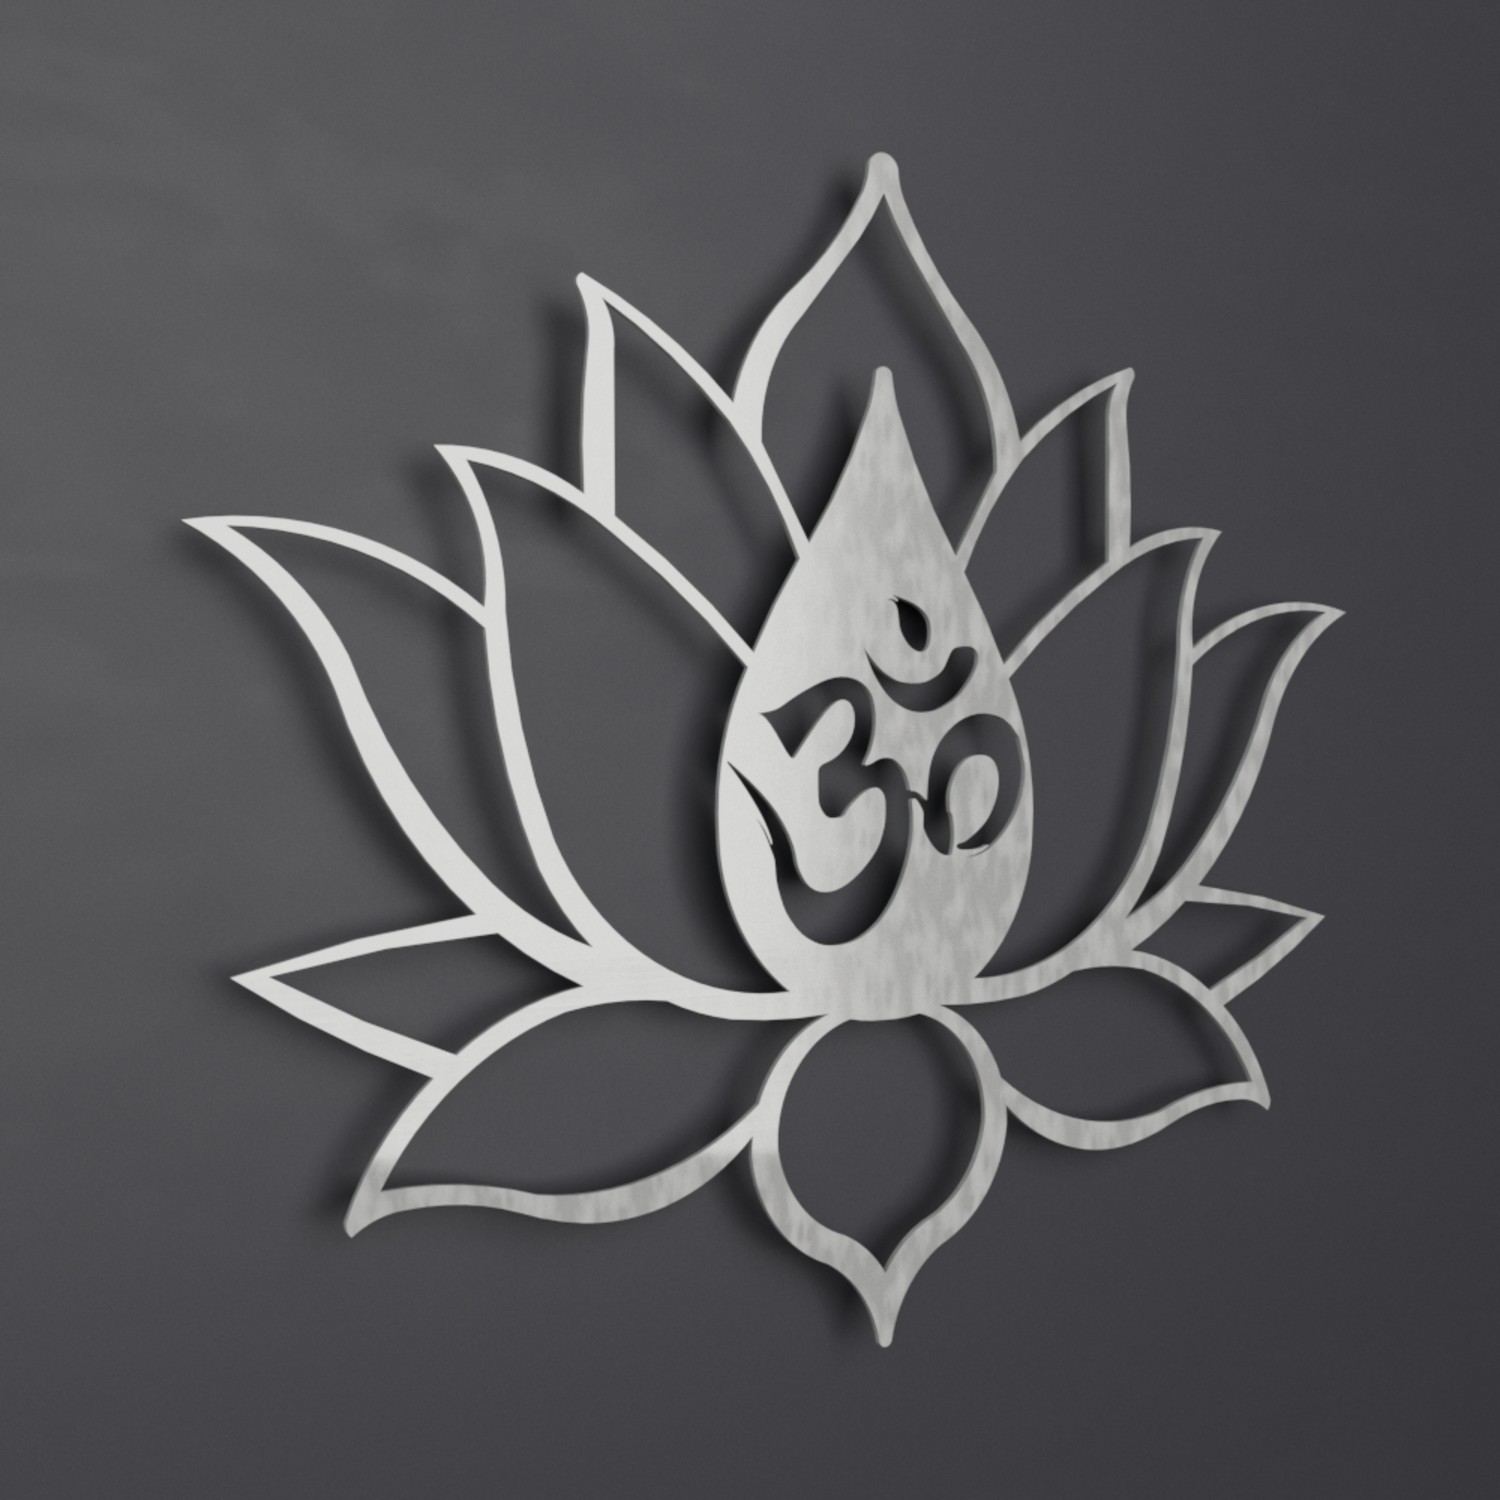 Om Symbol  Lotus  Flower  3D Metal Wall Art 36 W x 31 H x 0 